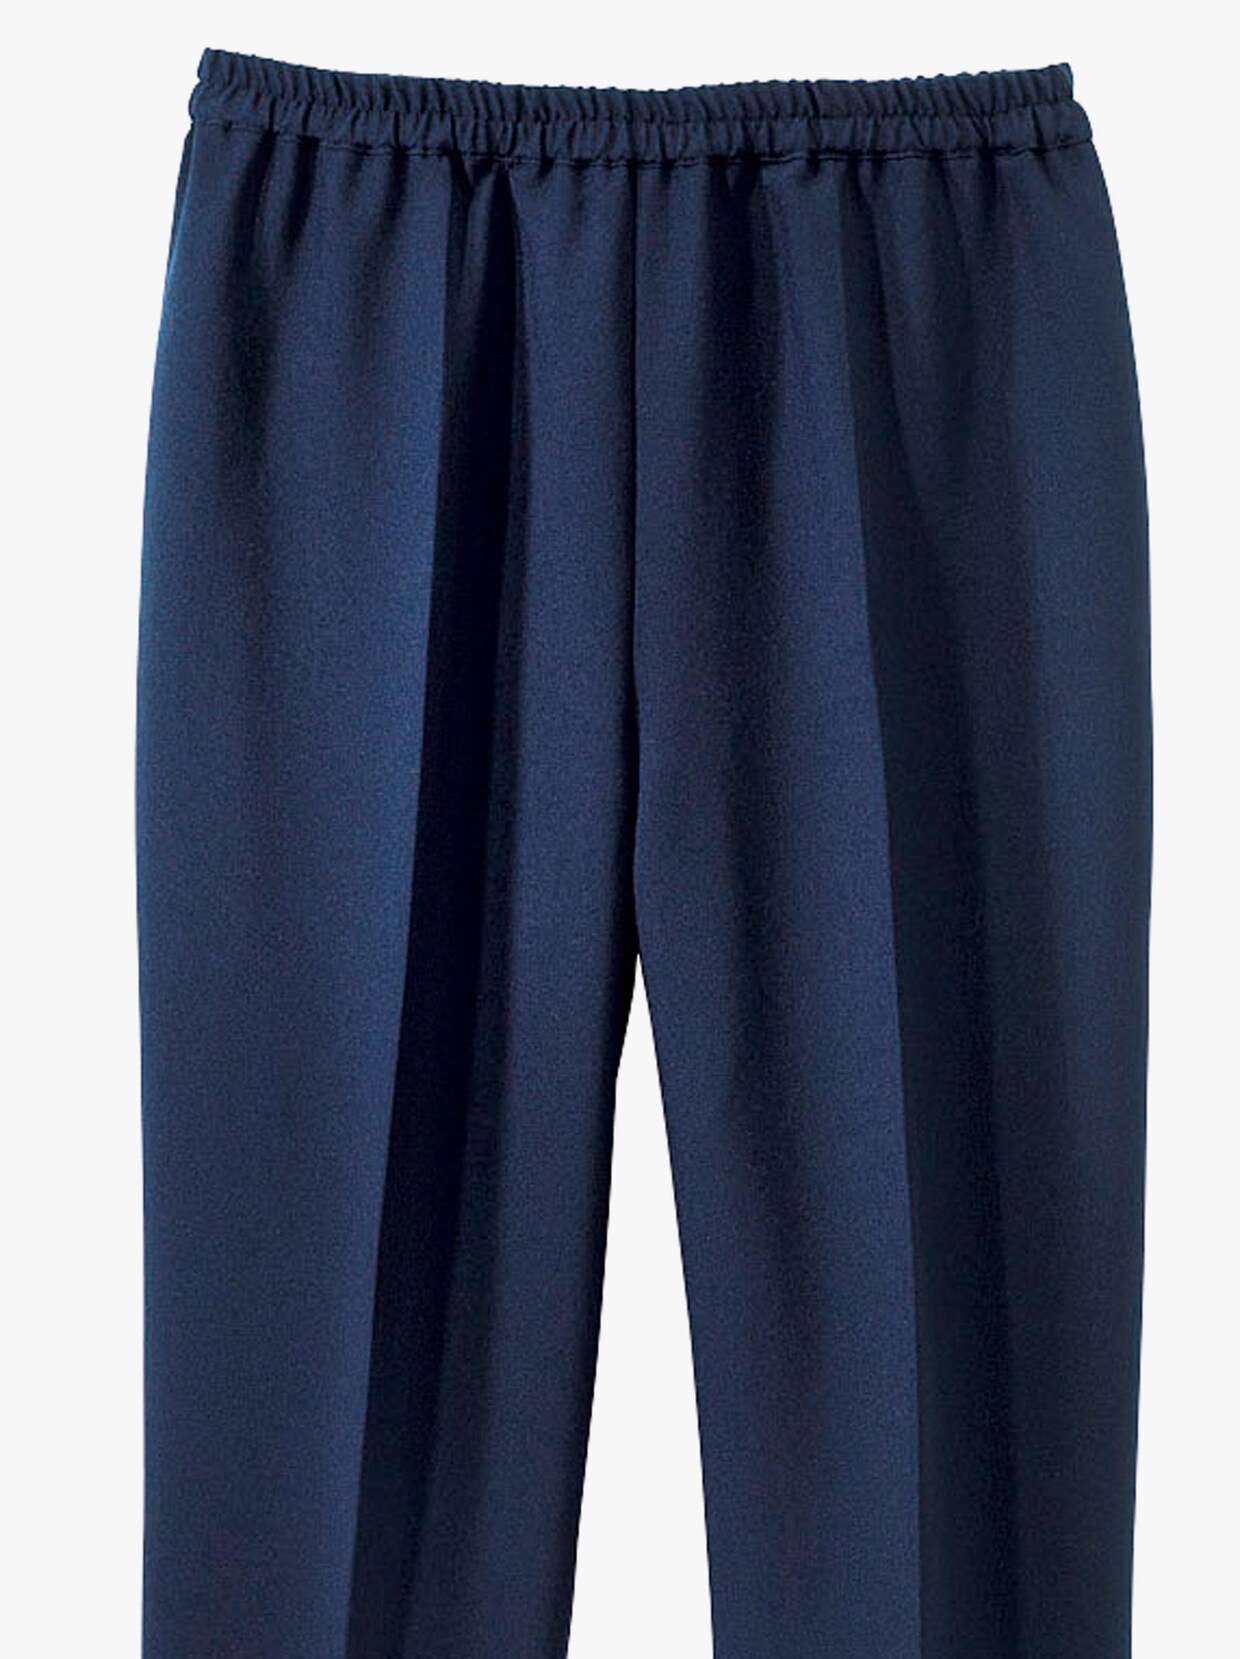 Capri kalhoty - námořnická modrá